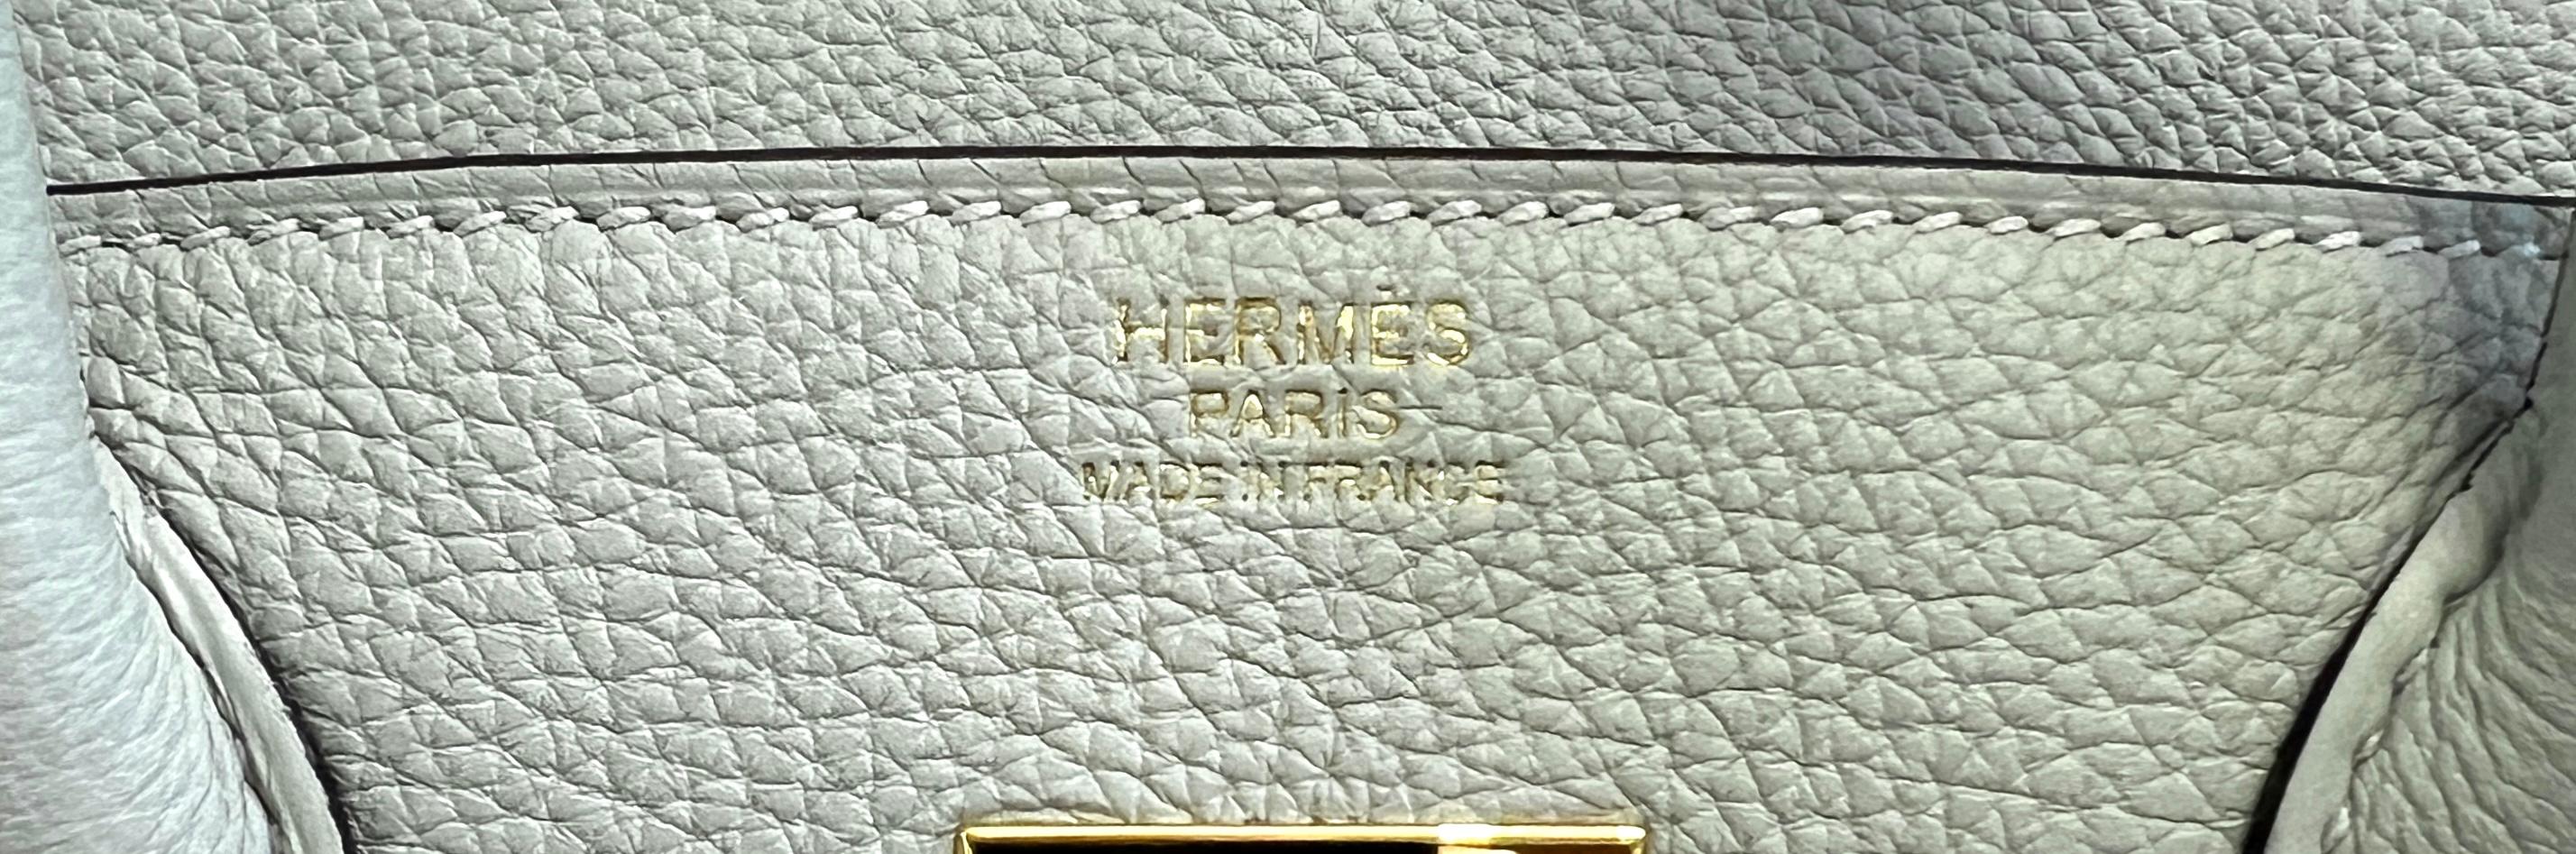 Hermès - Sac Birkin 30 gris Neve cuir Togo finitions métalliques dorées, état neuf 2023 2